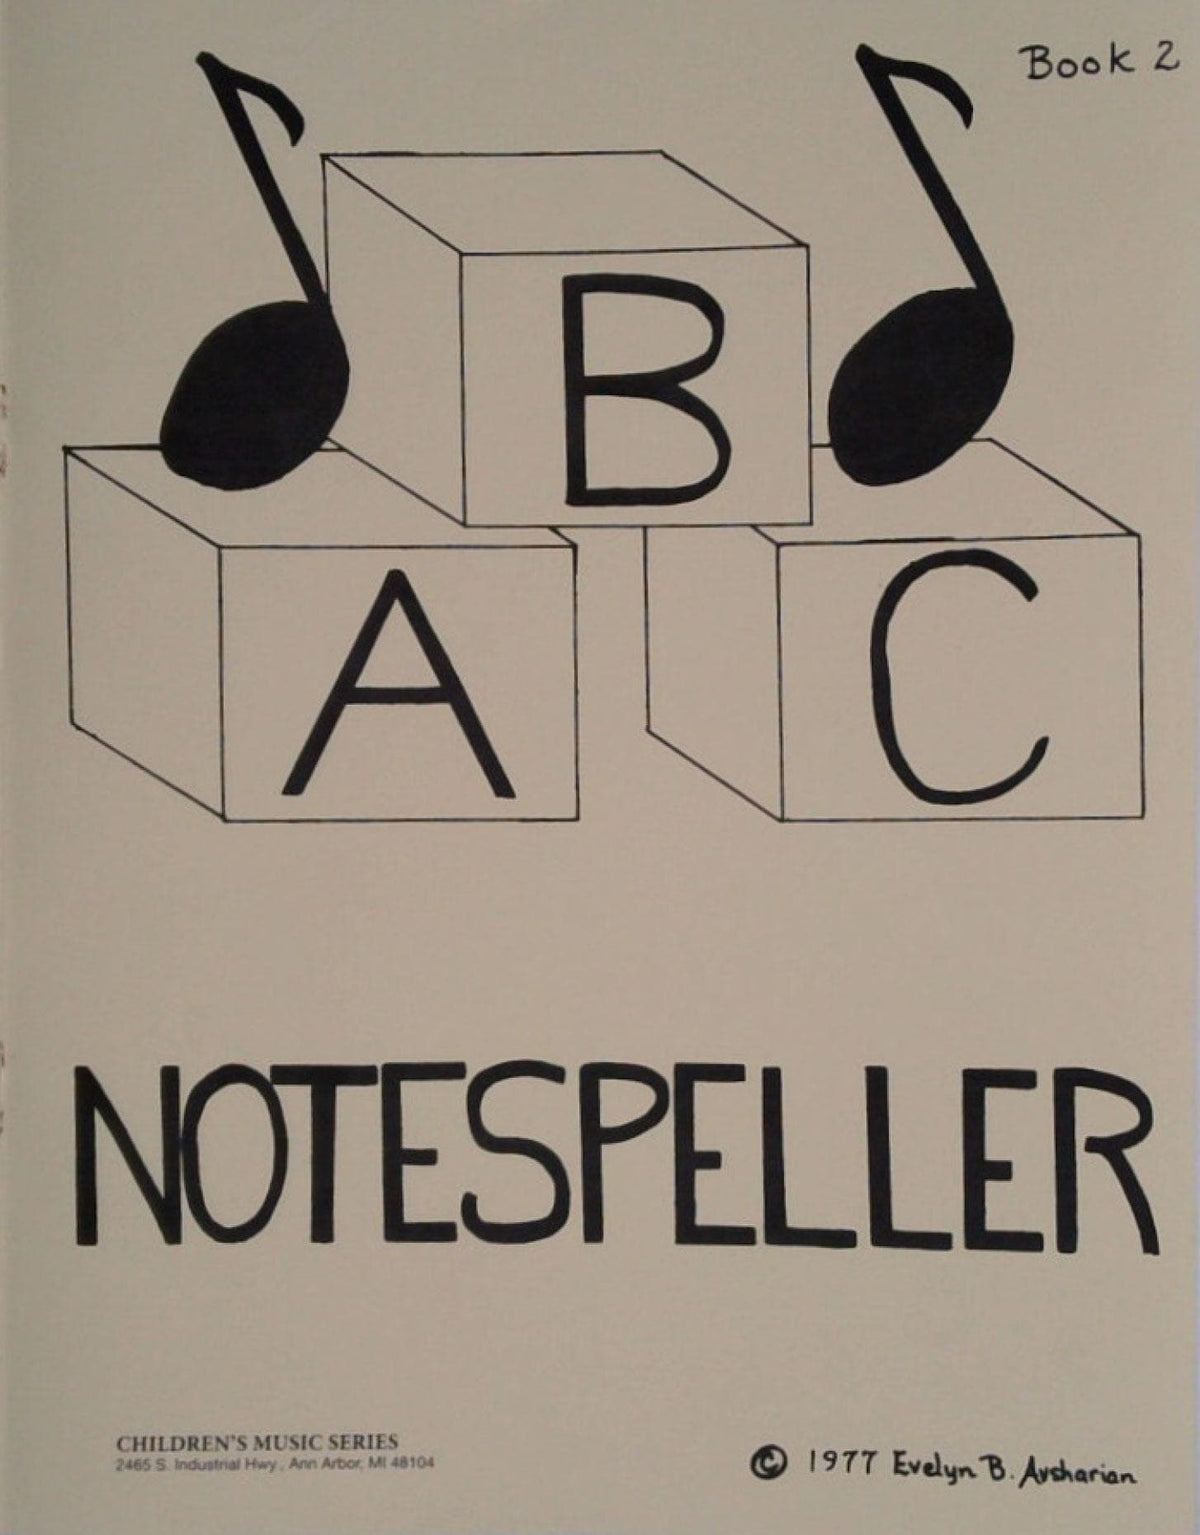 ABC Notespeller - Workbook 2 for Strings by Evelyn Avsharian - Digital Download